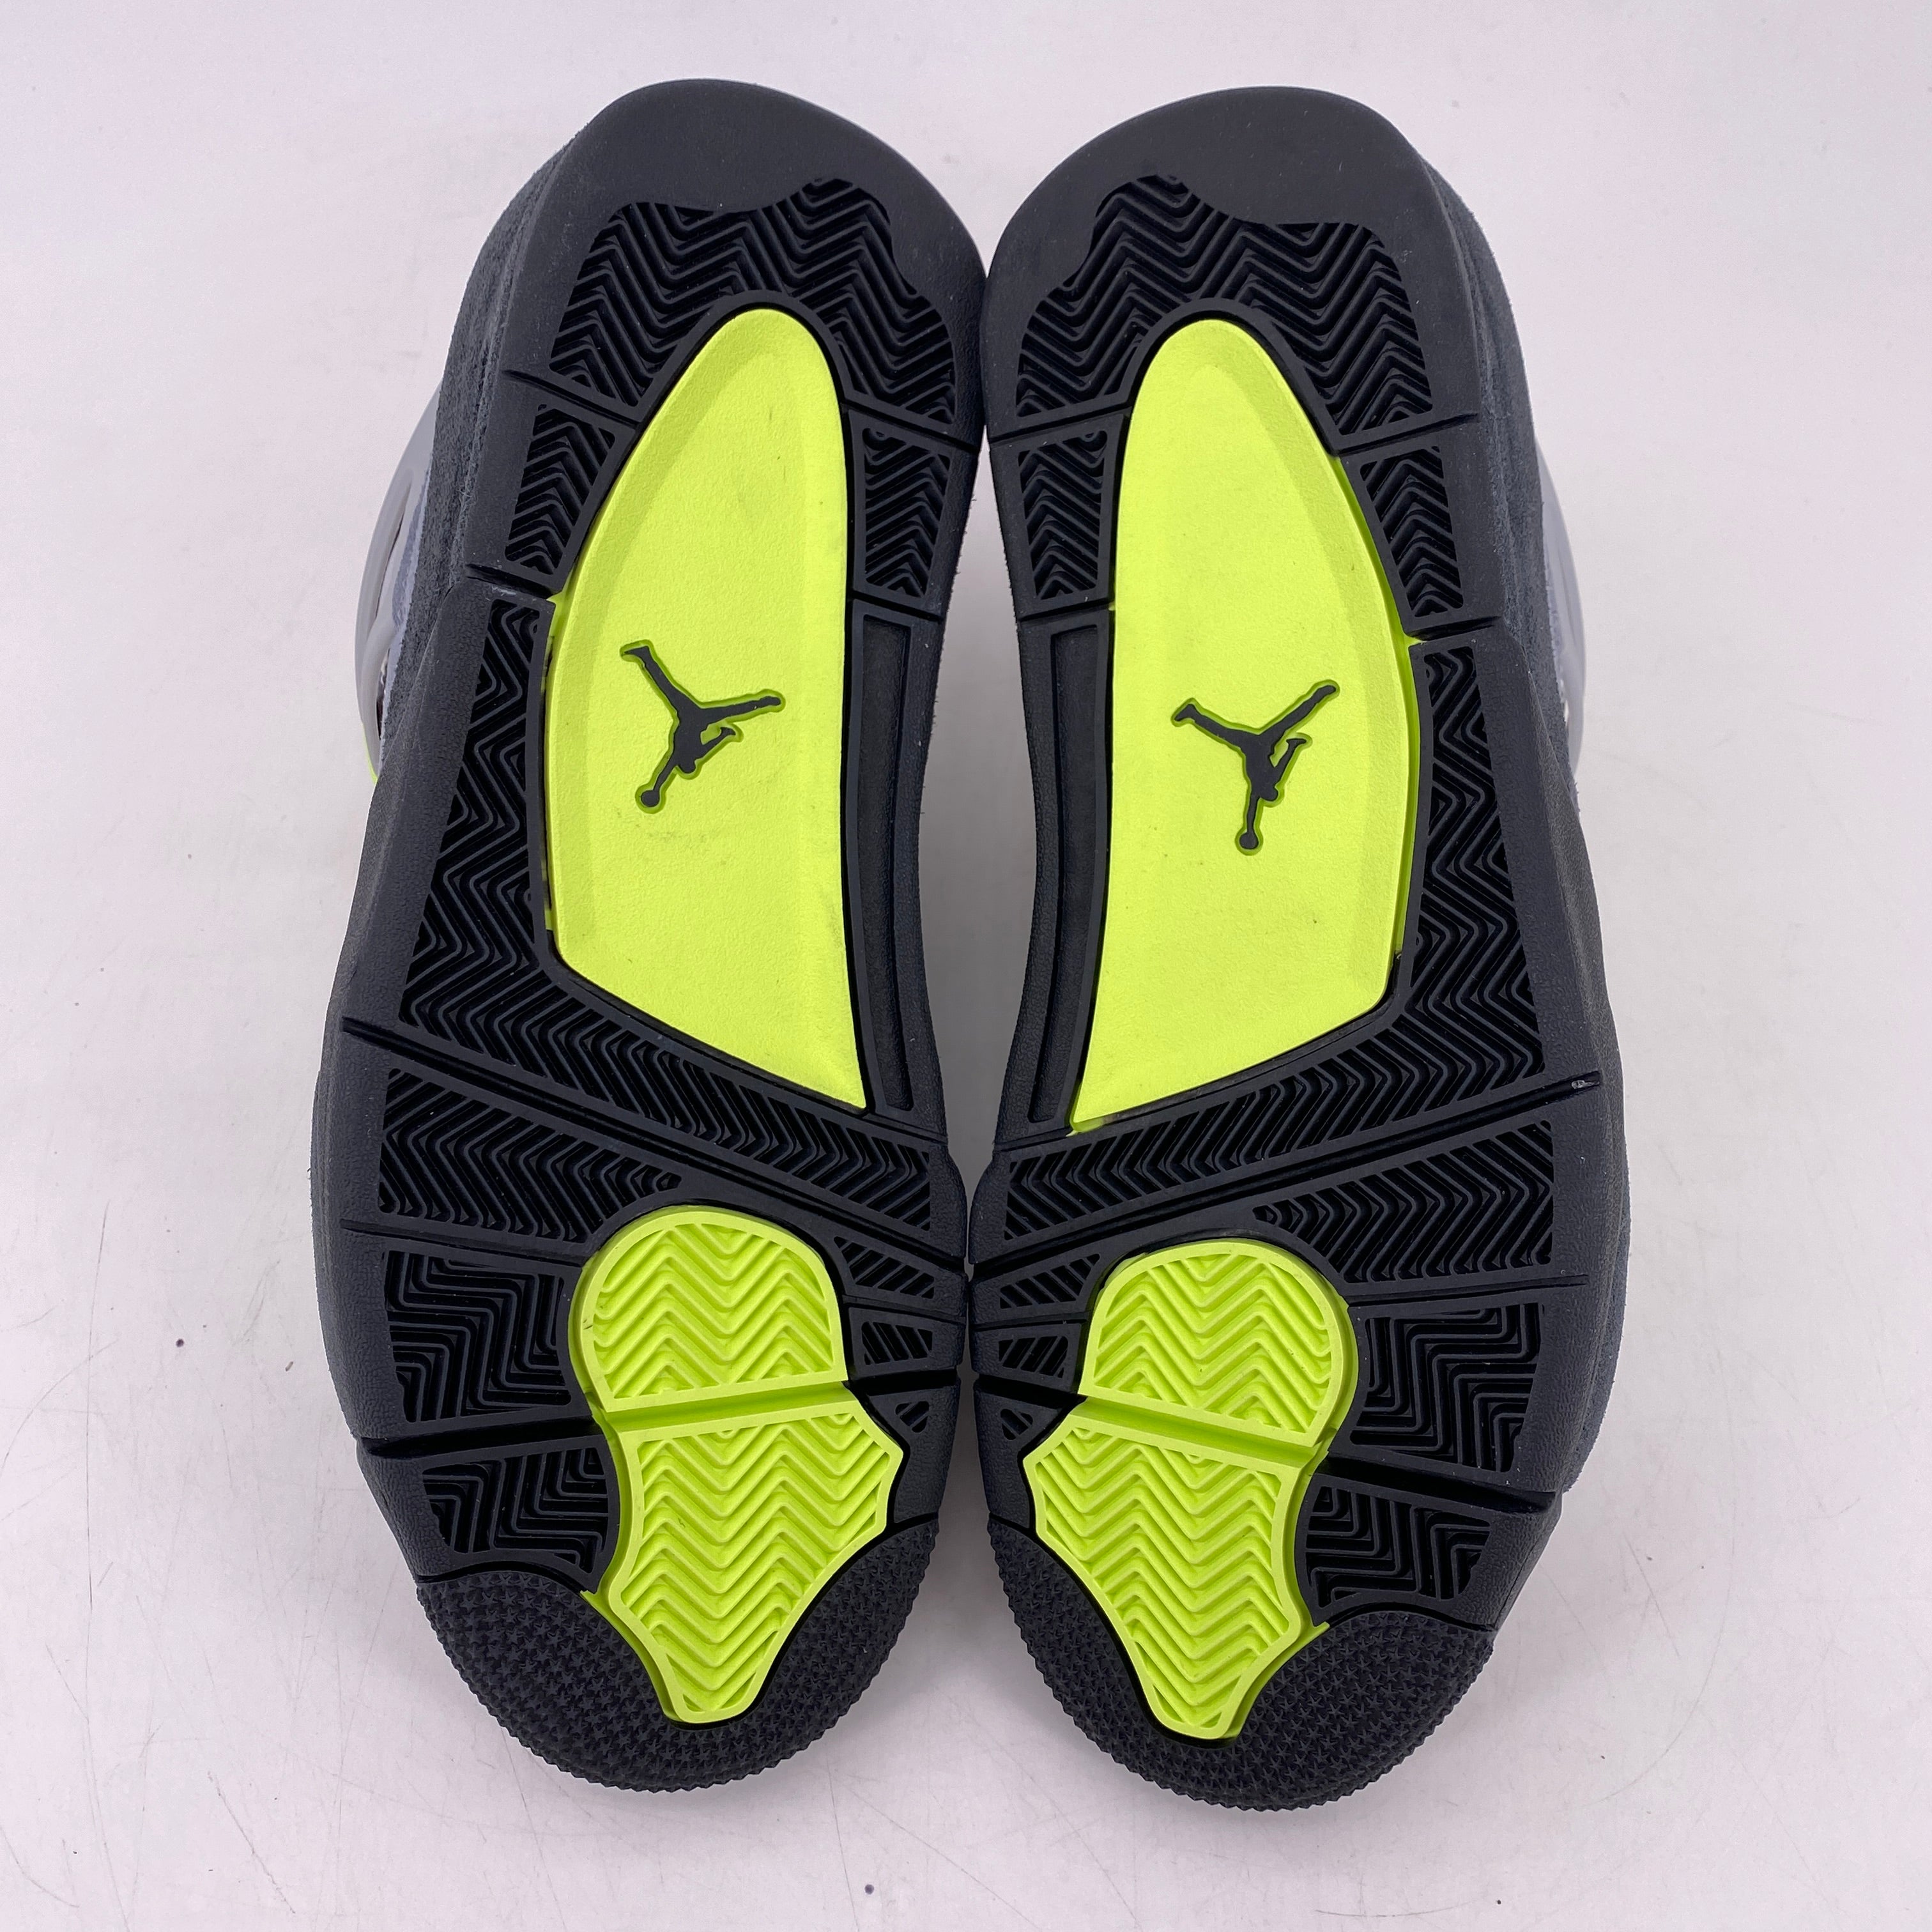 Air Jordan 4 Retro &quot;Neon&quot; 2020 New Size 8.5